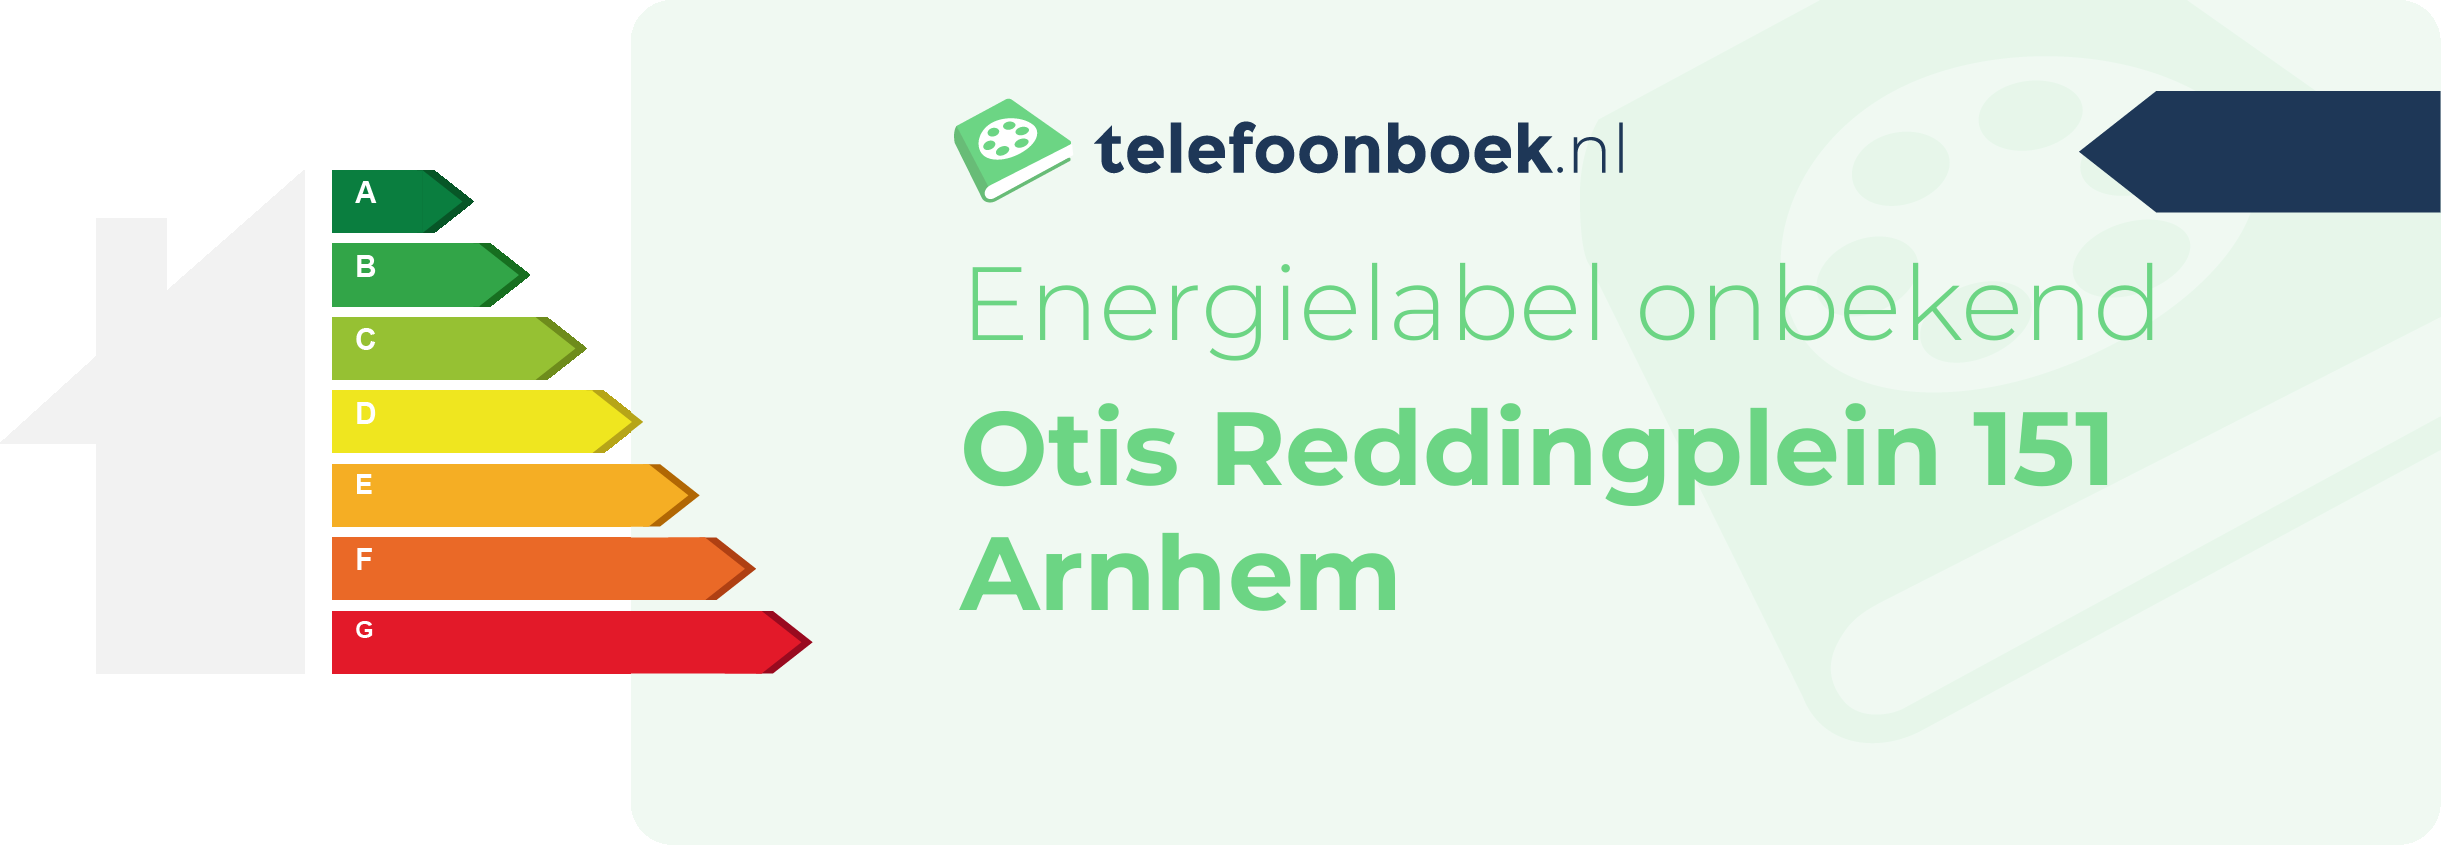 Energielabel Otis Reddingplein 151 Arnhem